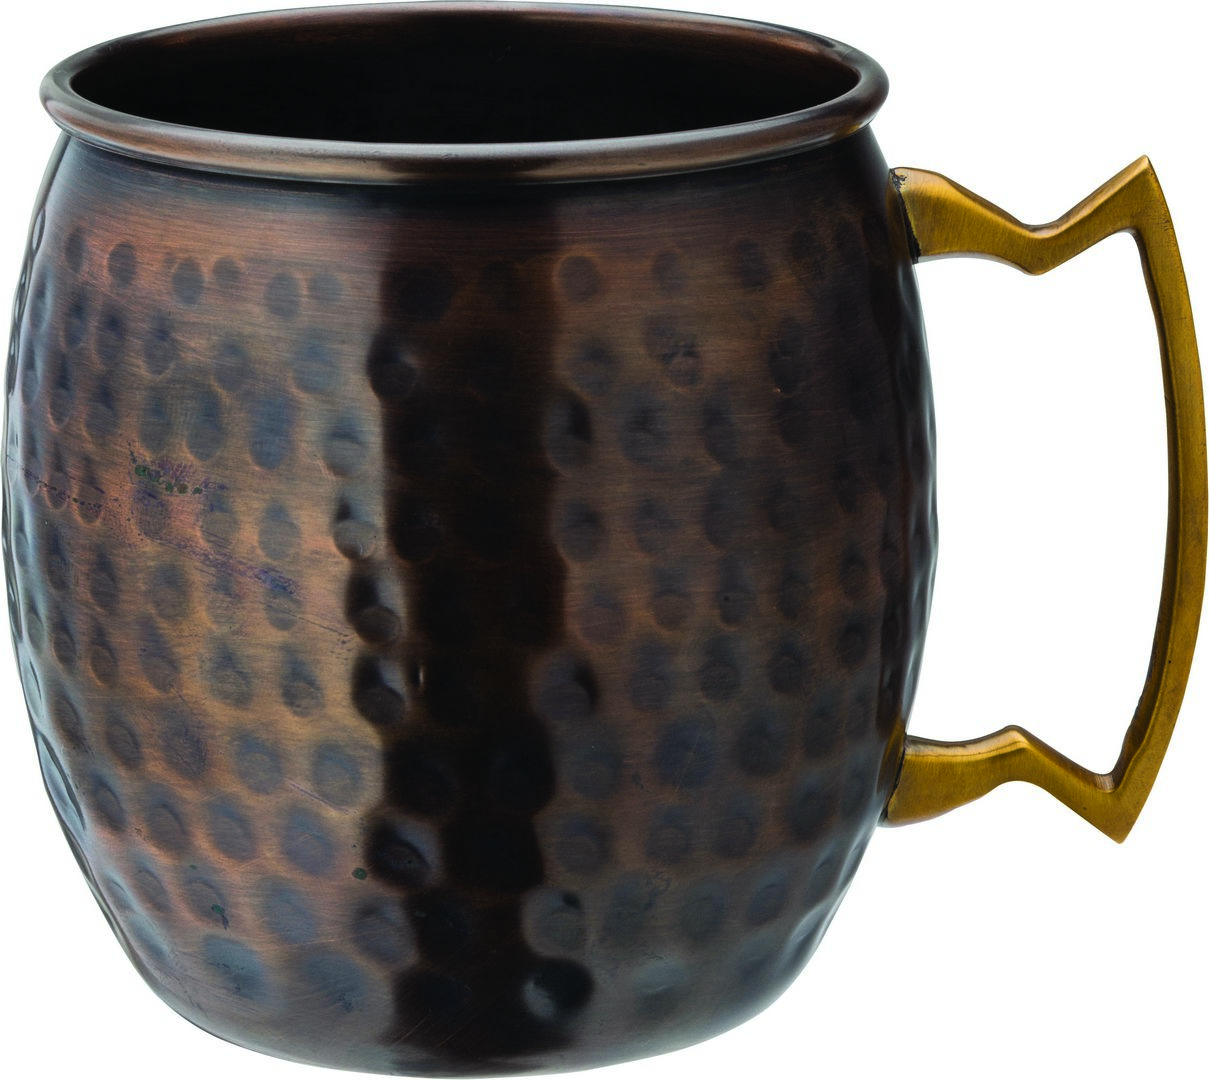 Aged Copper Hammered Round Mug 19oz (54cl) - F93031-000000-B01006 (Pack of 6)